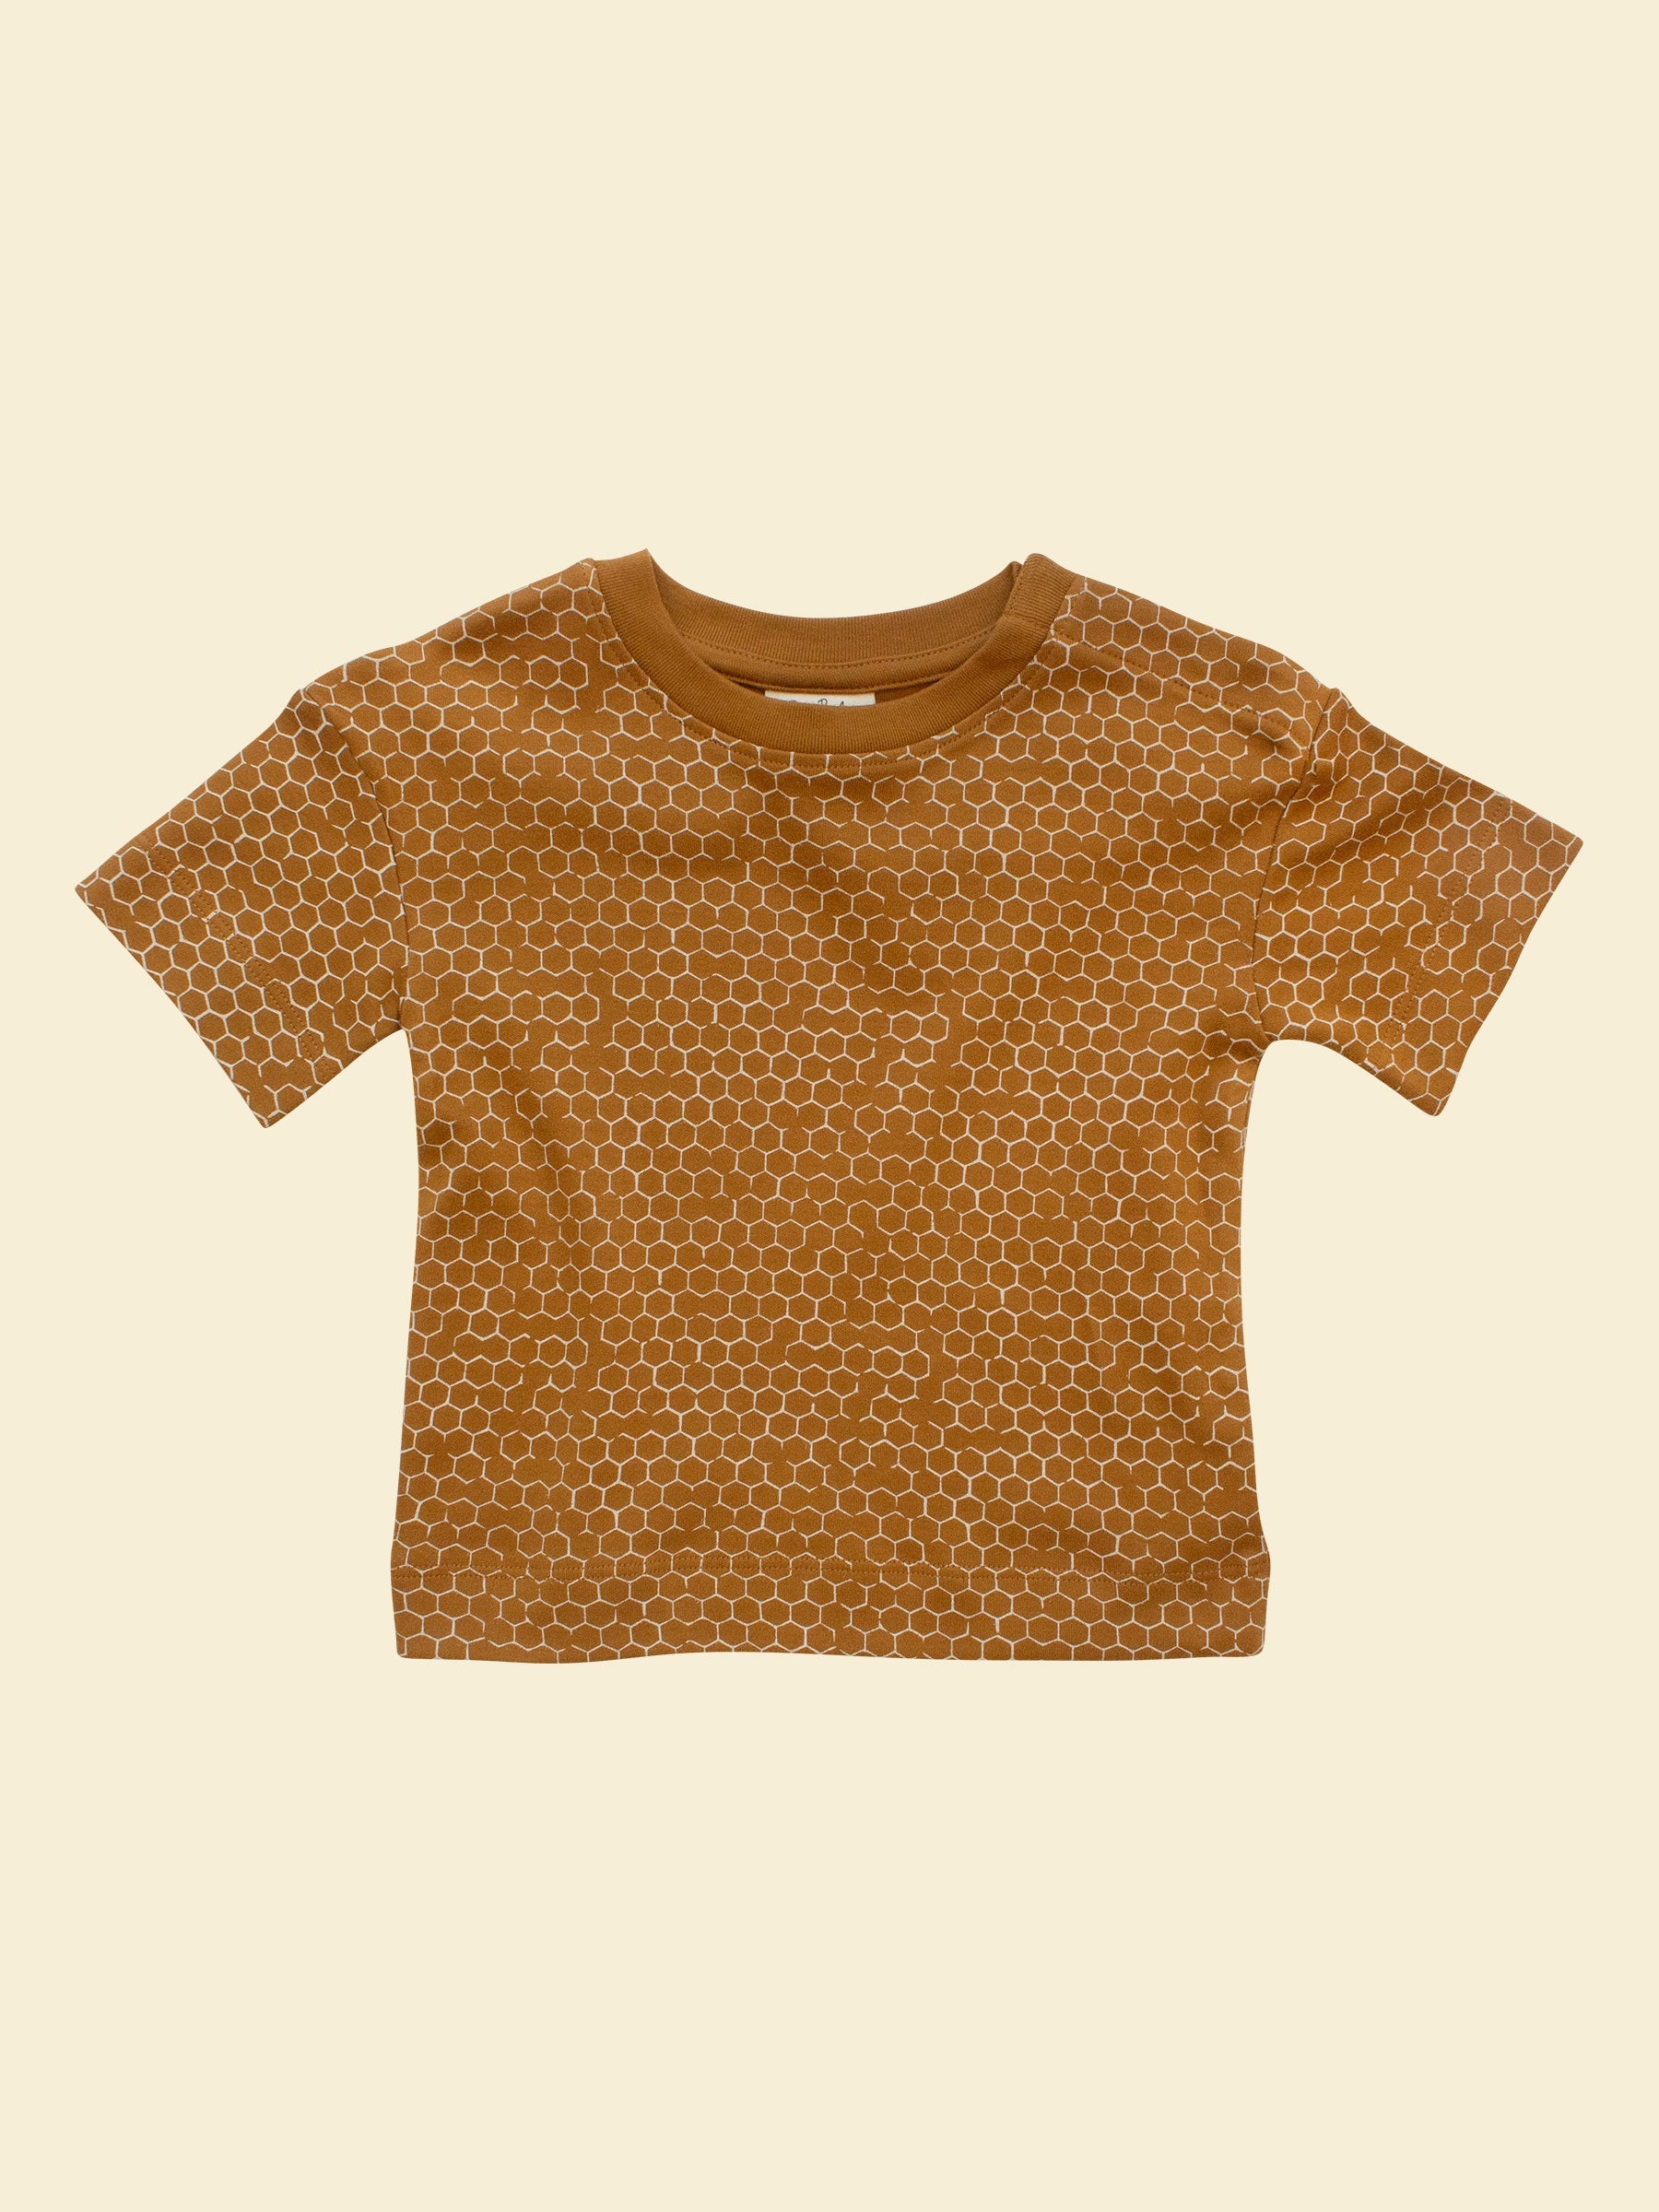 Unisex T-shirt - Honeycomb